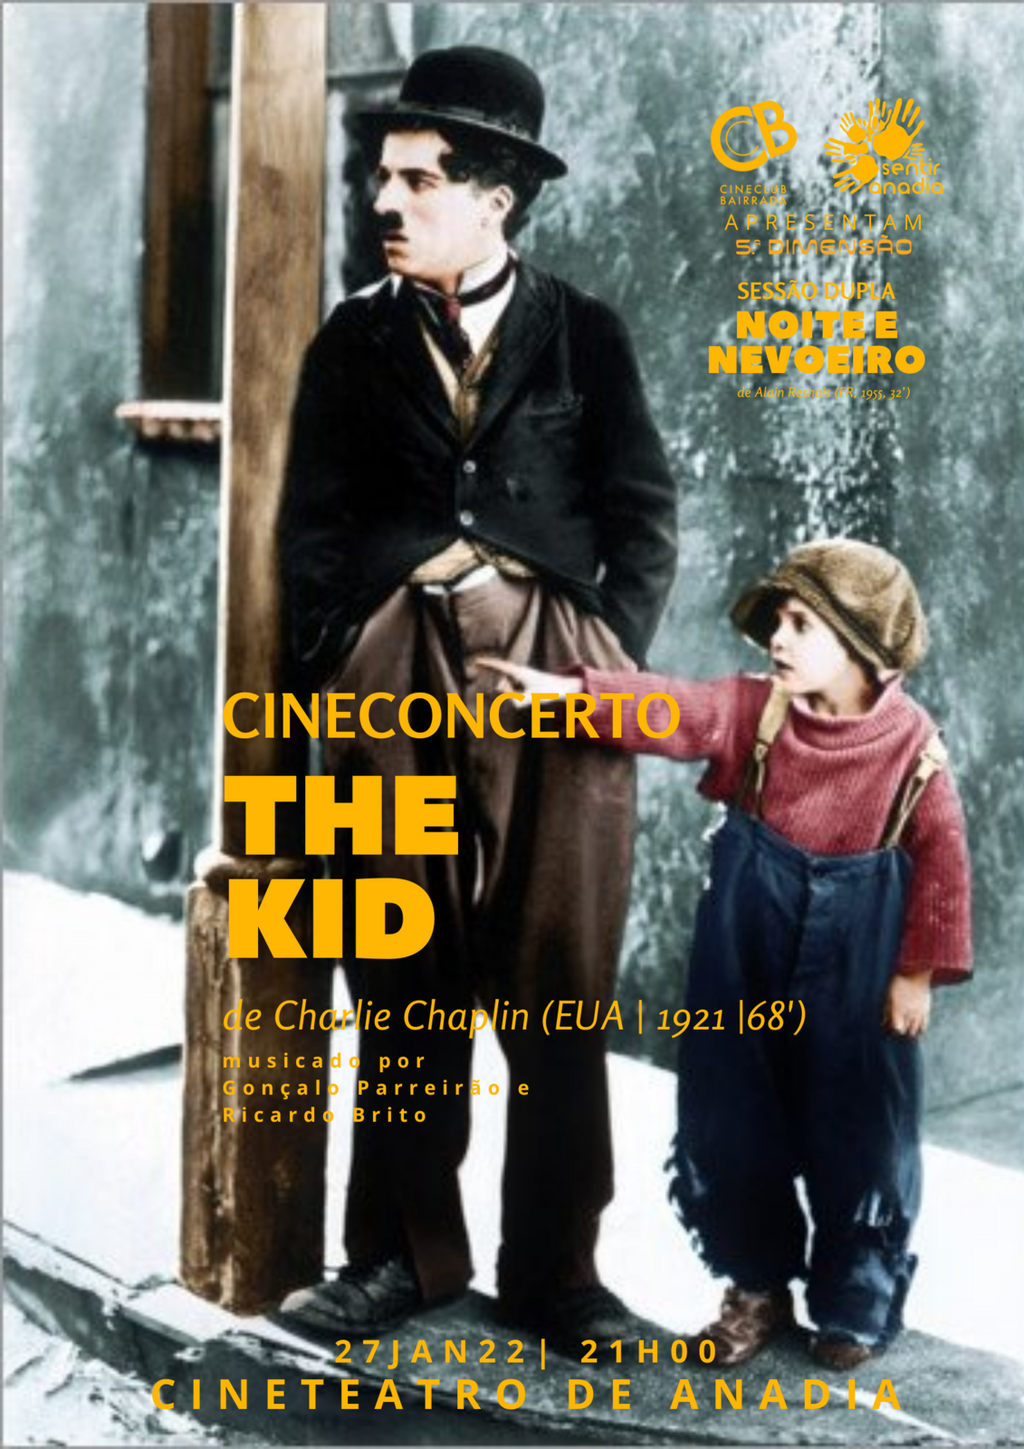 Cine Concerto "The Kid" | sessão dupla